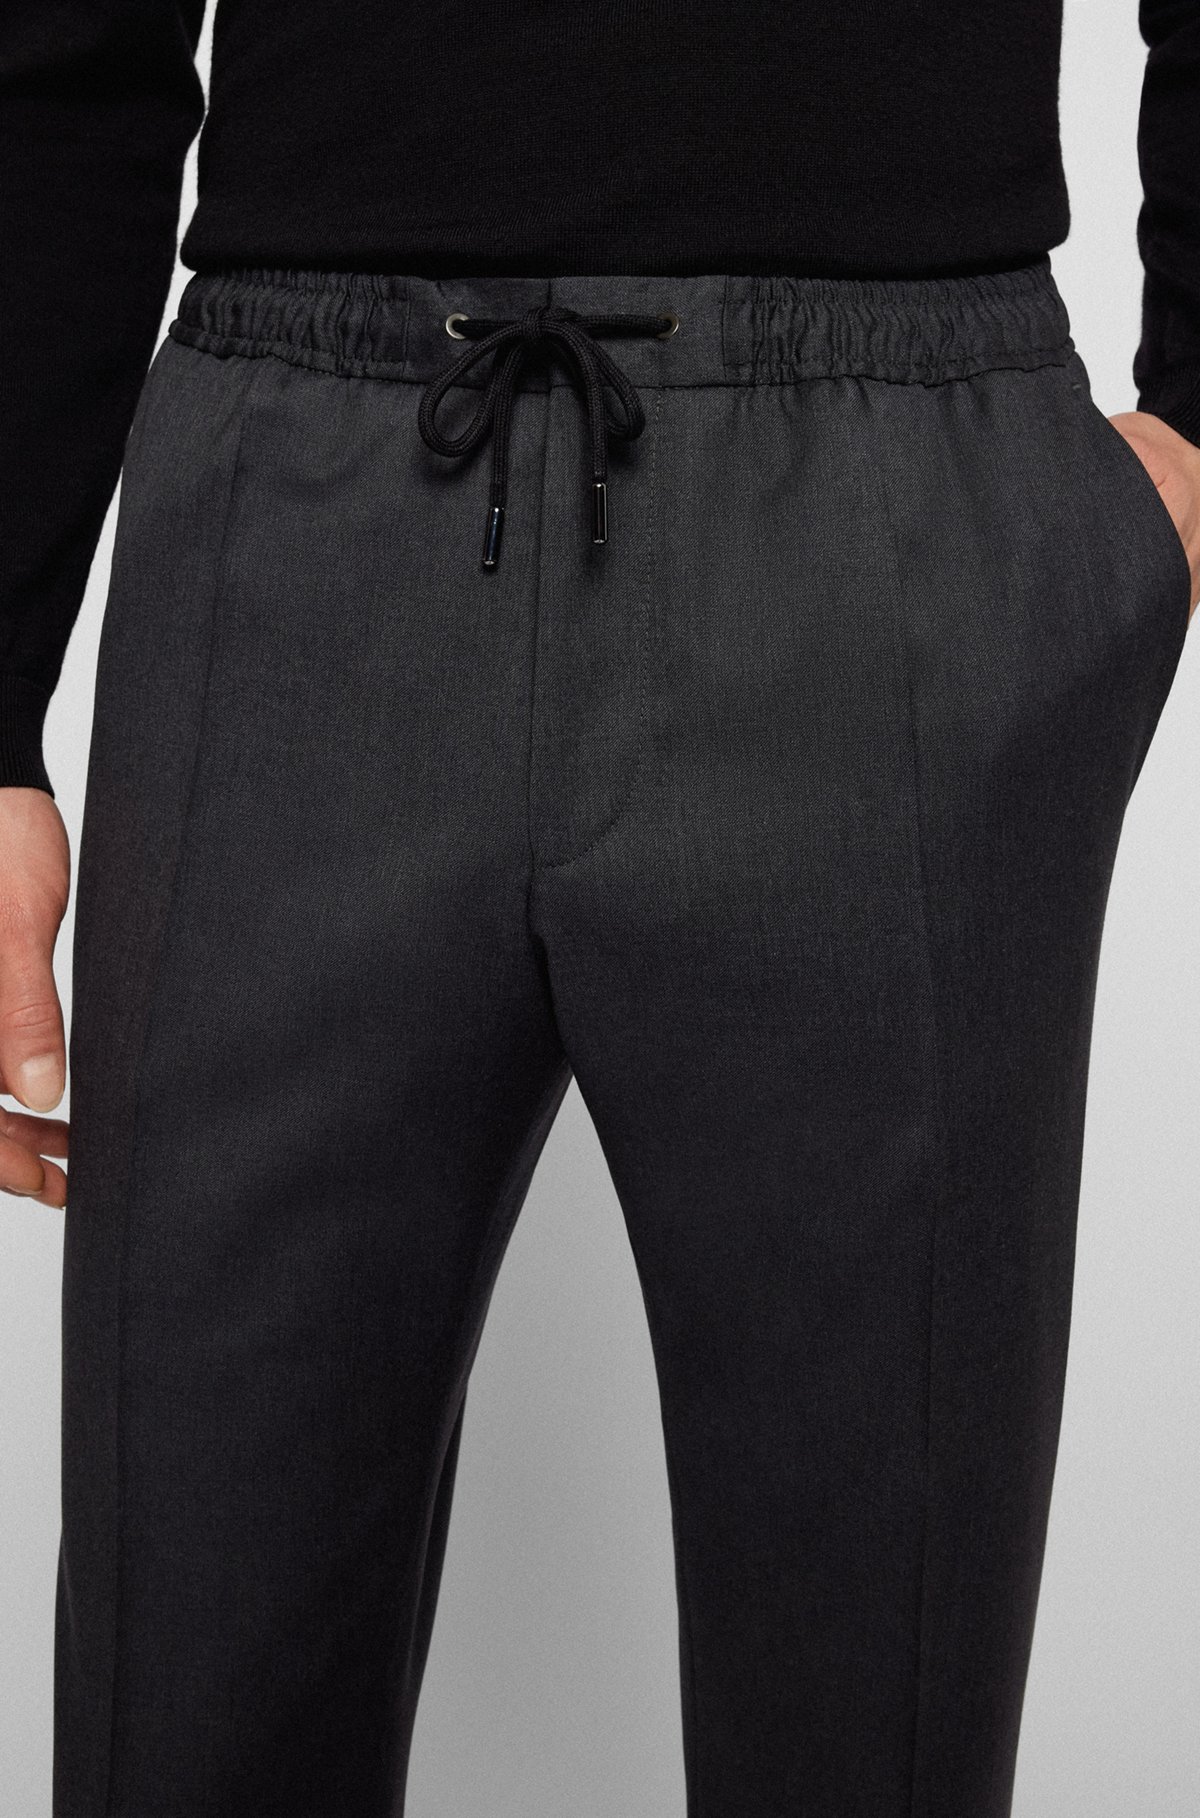 BOSS - Slim-fit pants in virgin wool with drawstring waist